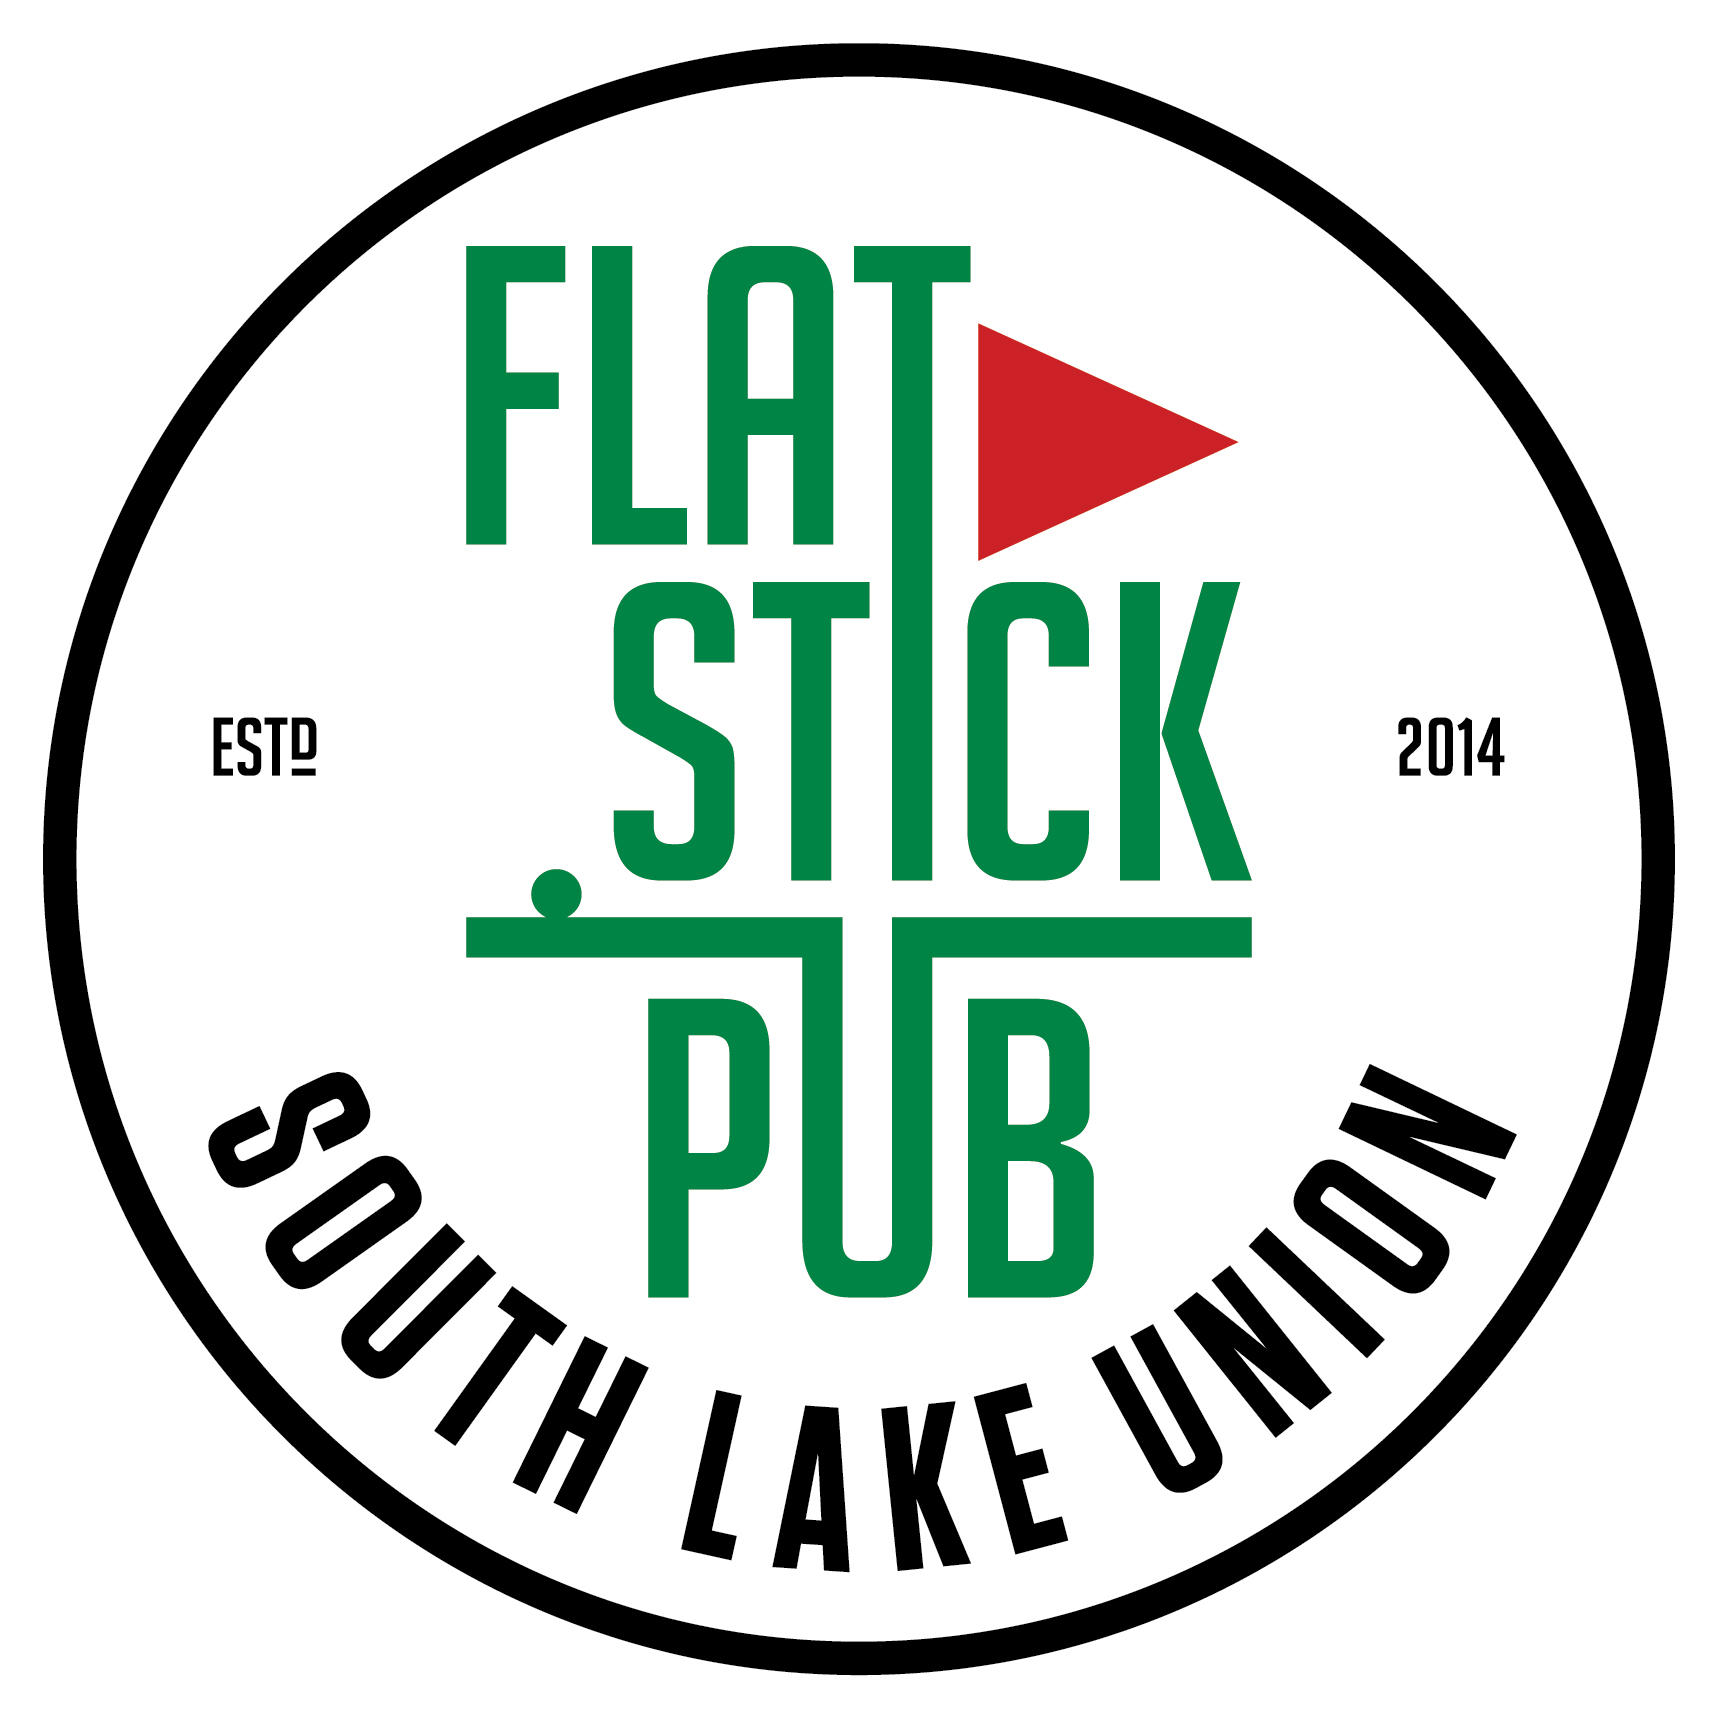 Flatstick pub - south lake union